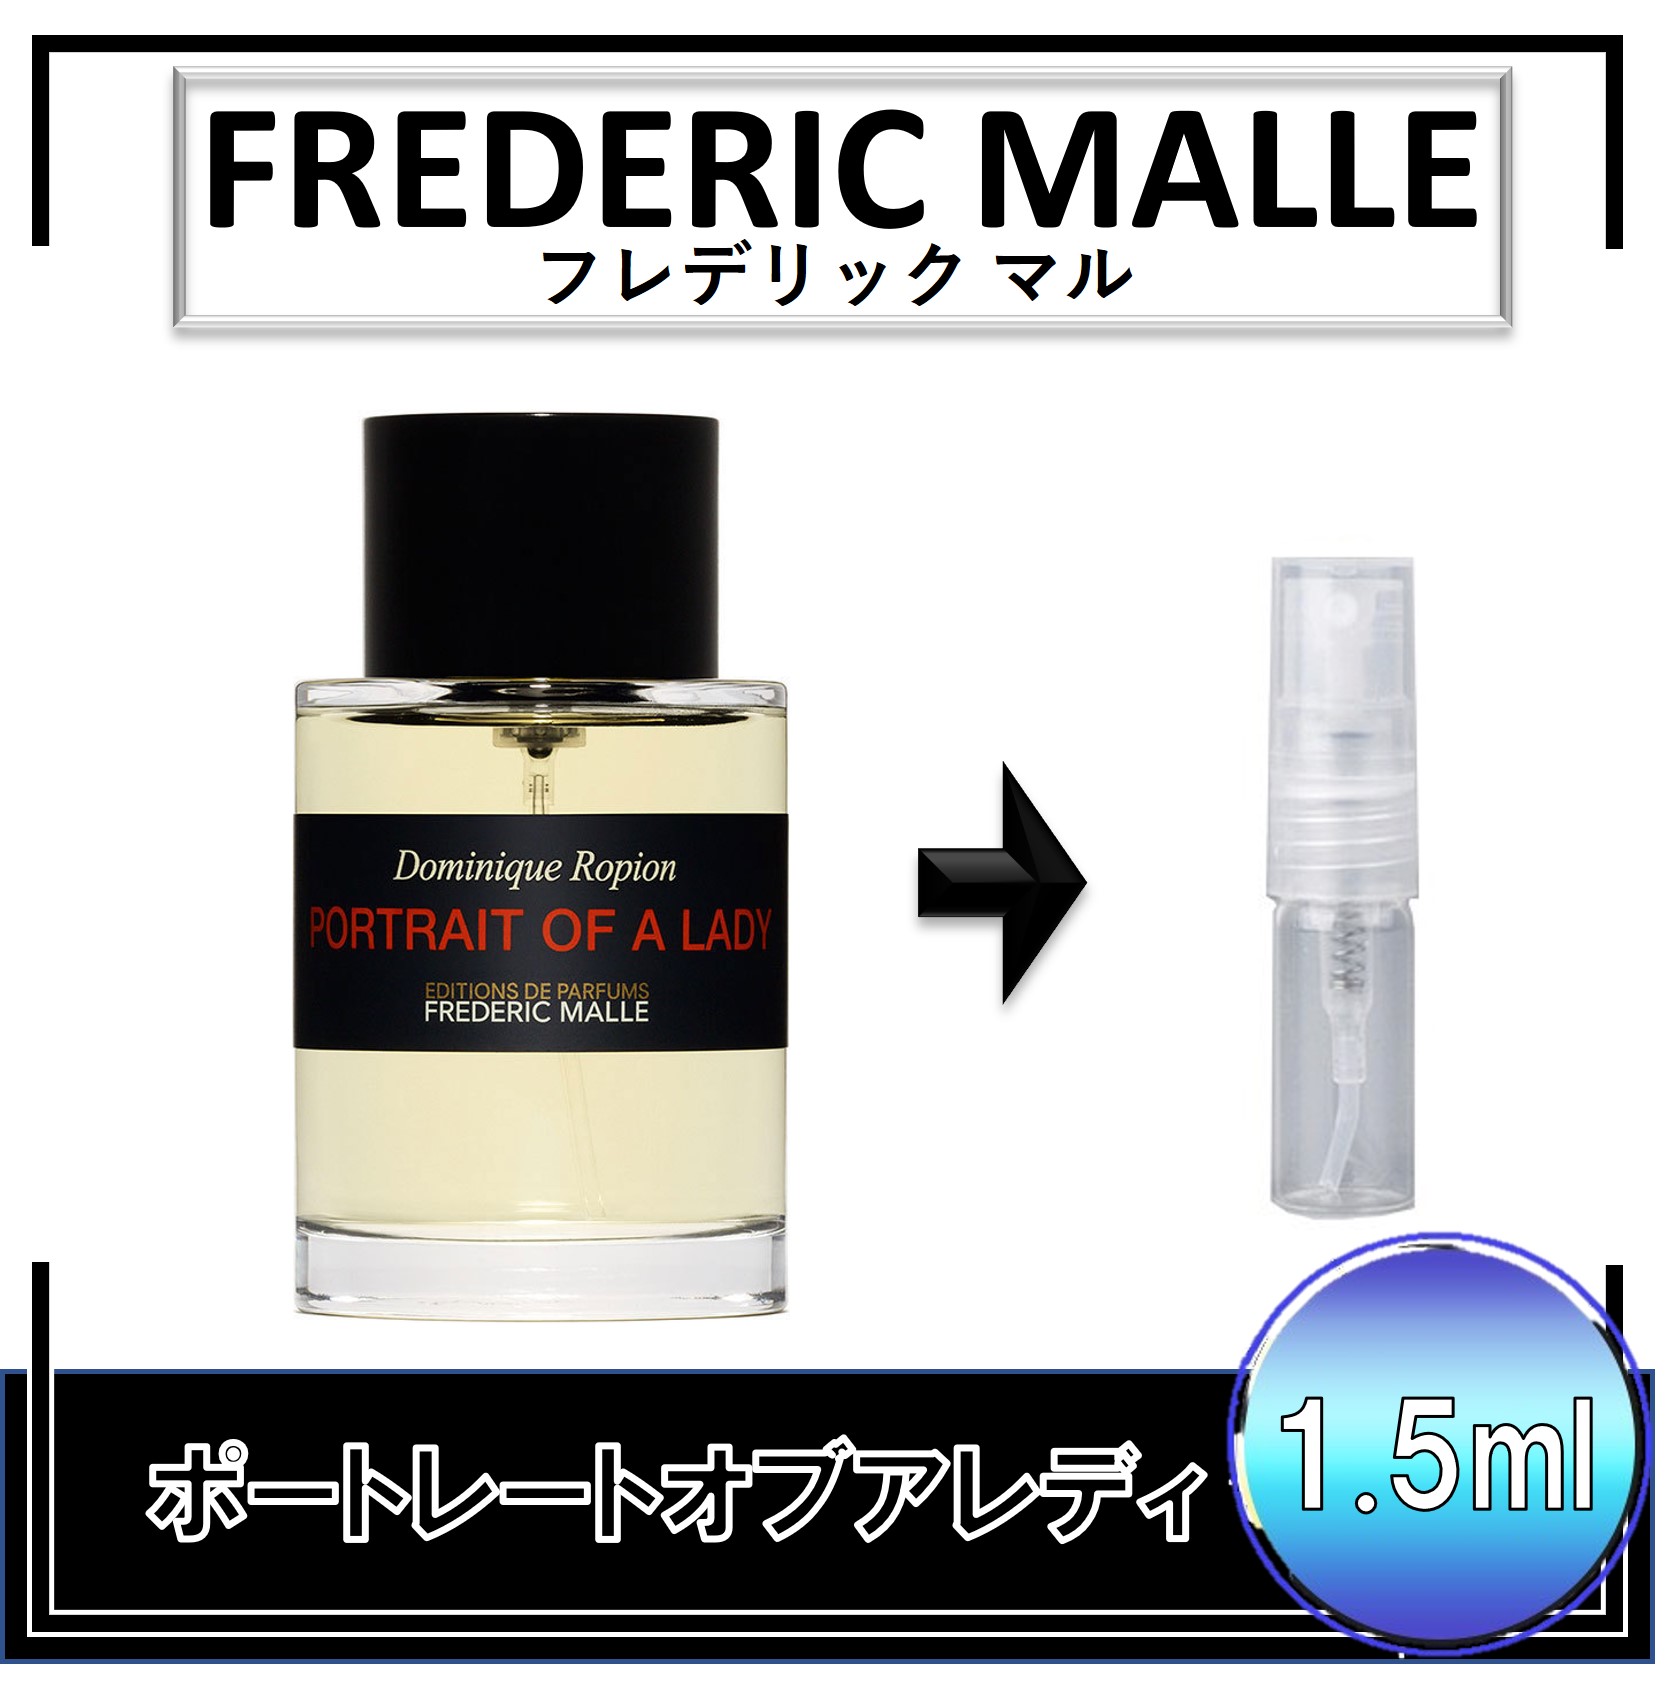 FREDERIC MALLE ポートレイトオブアレディー 香水 - ユニセックス